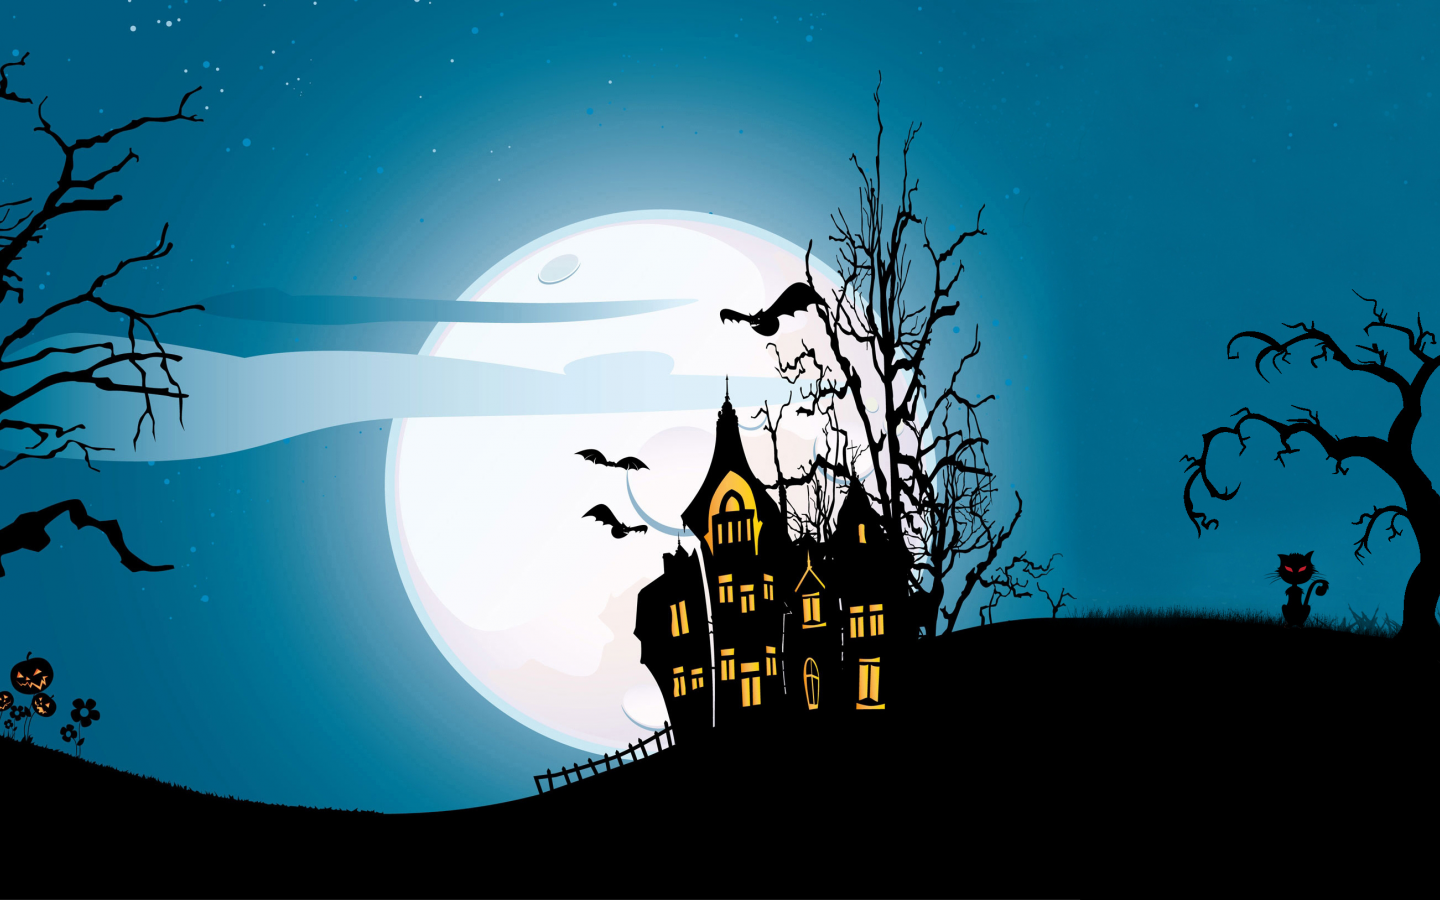 full moon, creepy, bat, holiday halloween, evil pumpkin, horror, trees, vector, scary house, castle